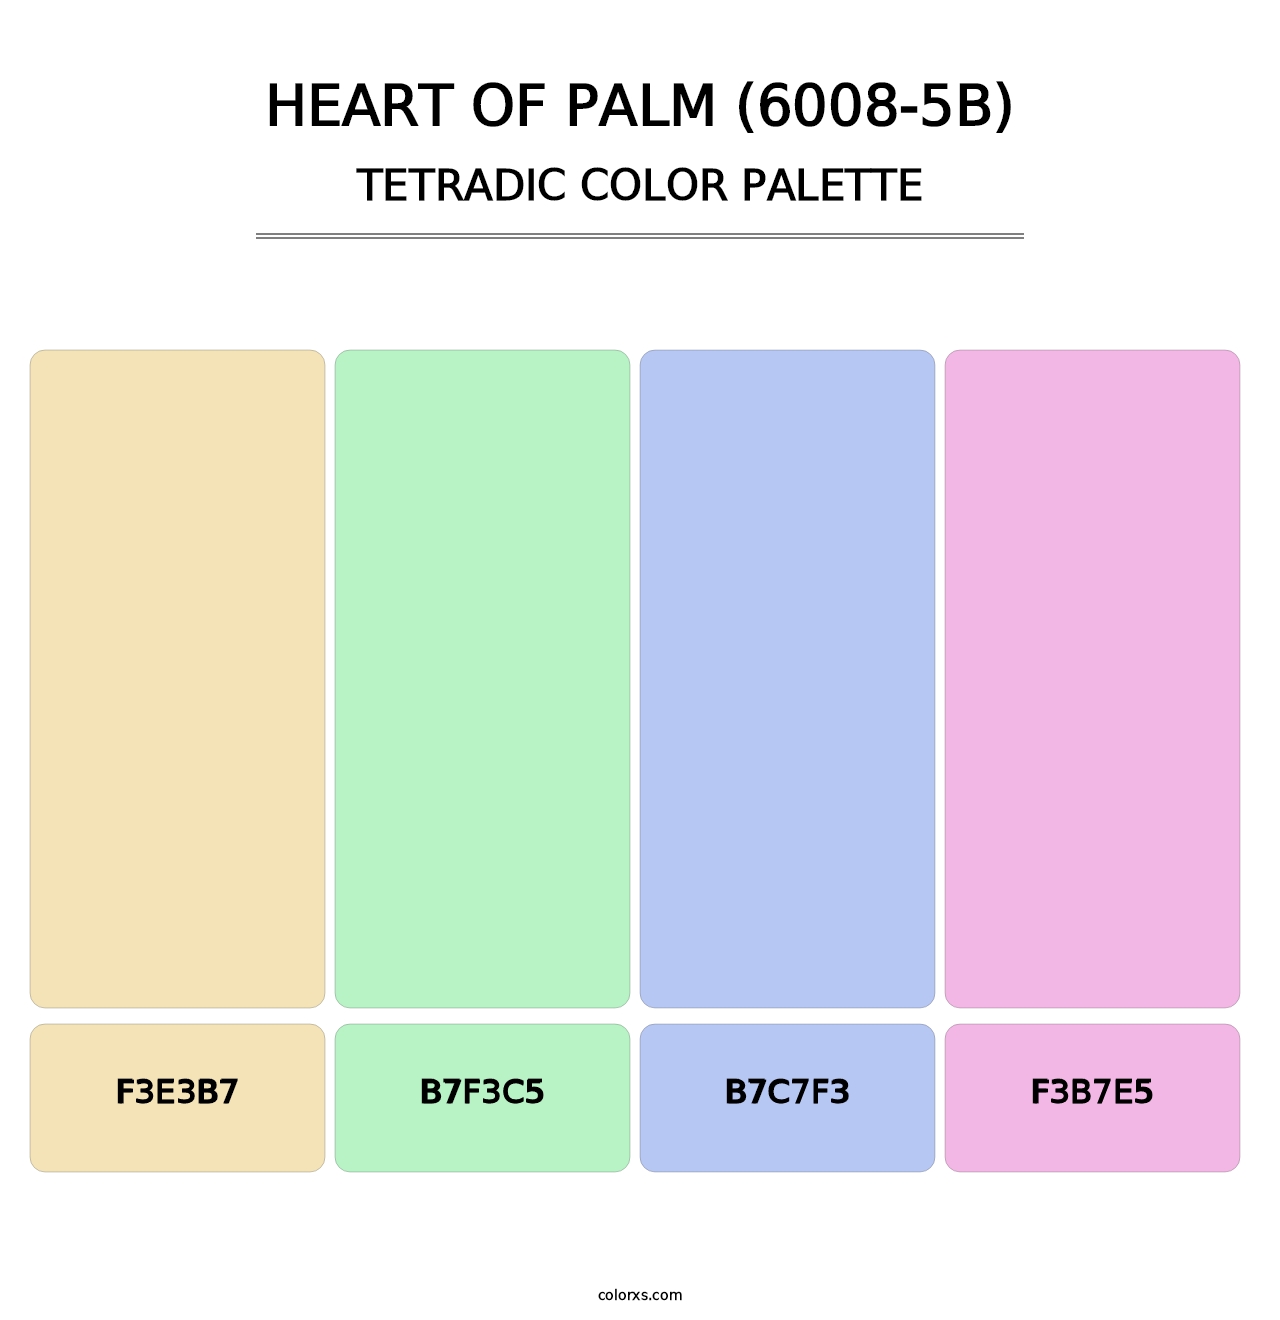 Heart of Palm (6008-5B) - Tetradic Color Palette